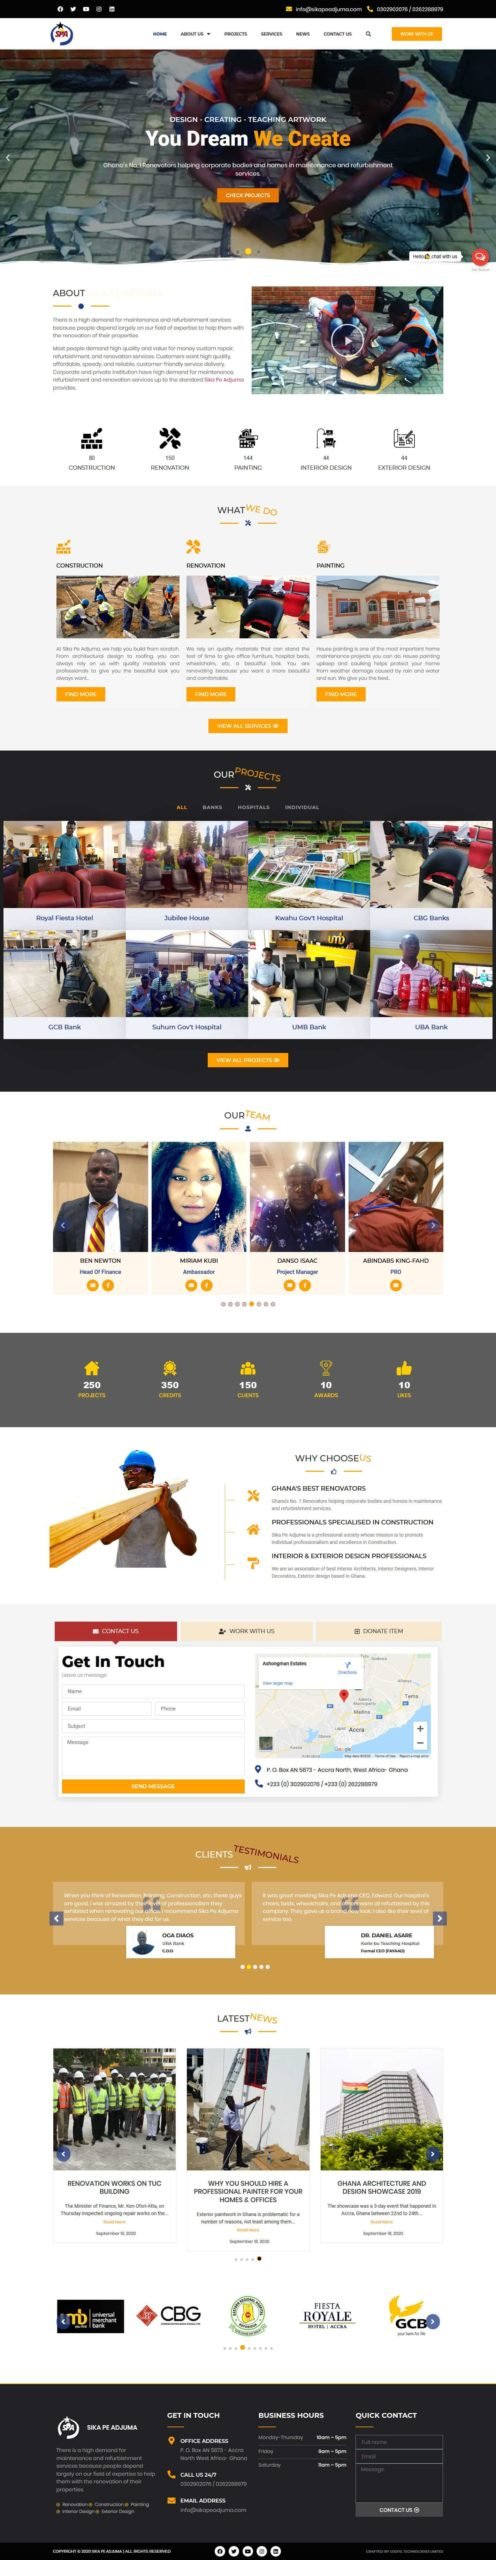 Sika Pe Adjuma Enterprise Screenshot - Uddfel Technologies Limited